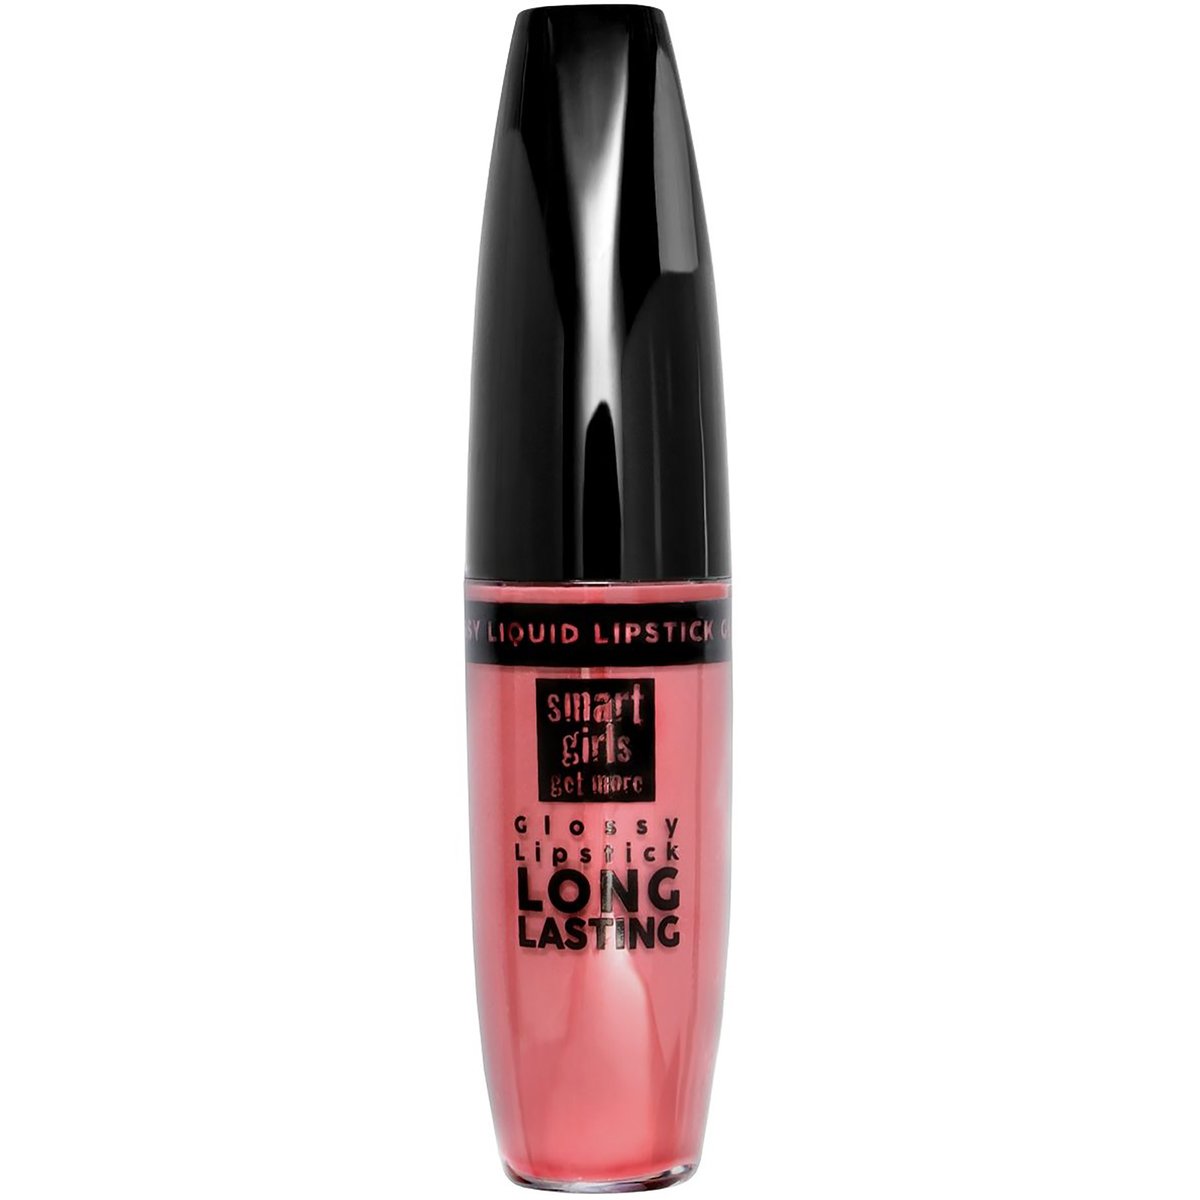 Smart Girls Get More Glossy Liquid Lipstick Long Lasting 03 1pc